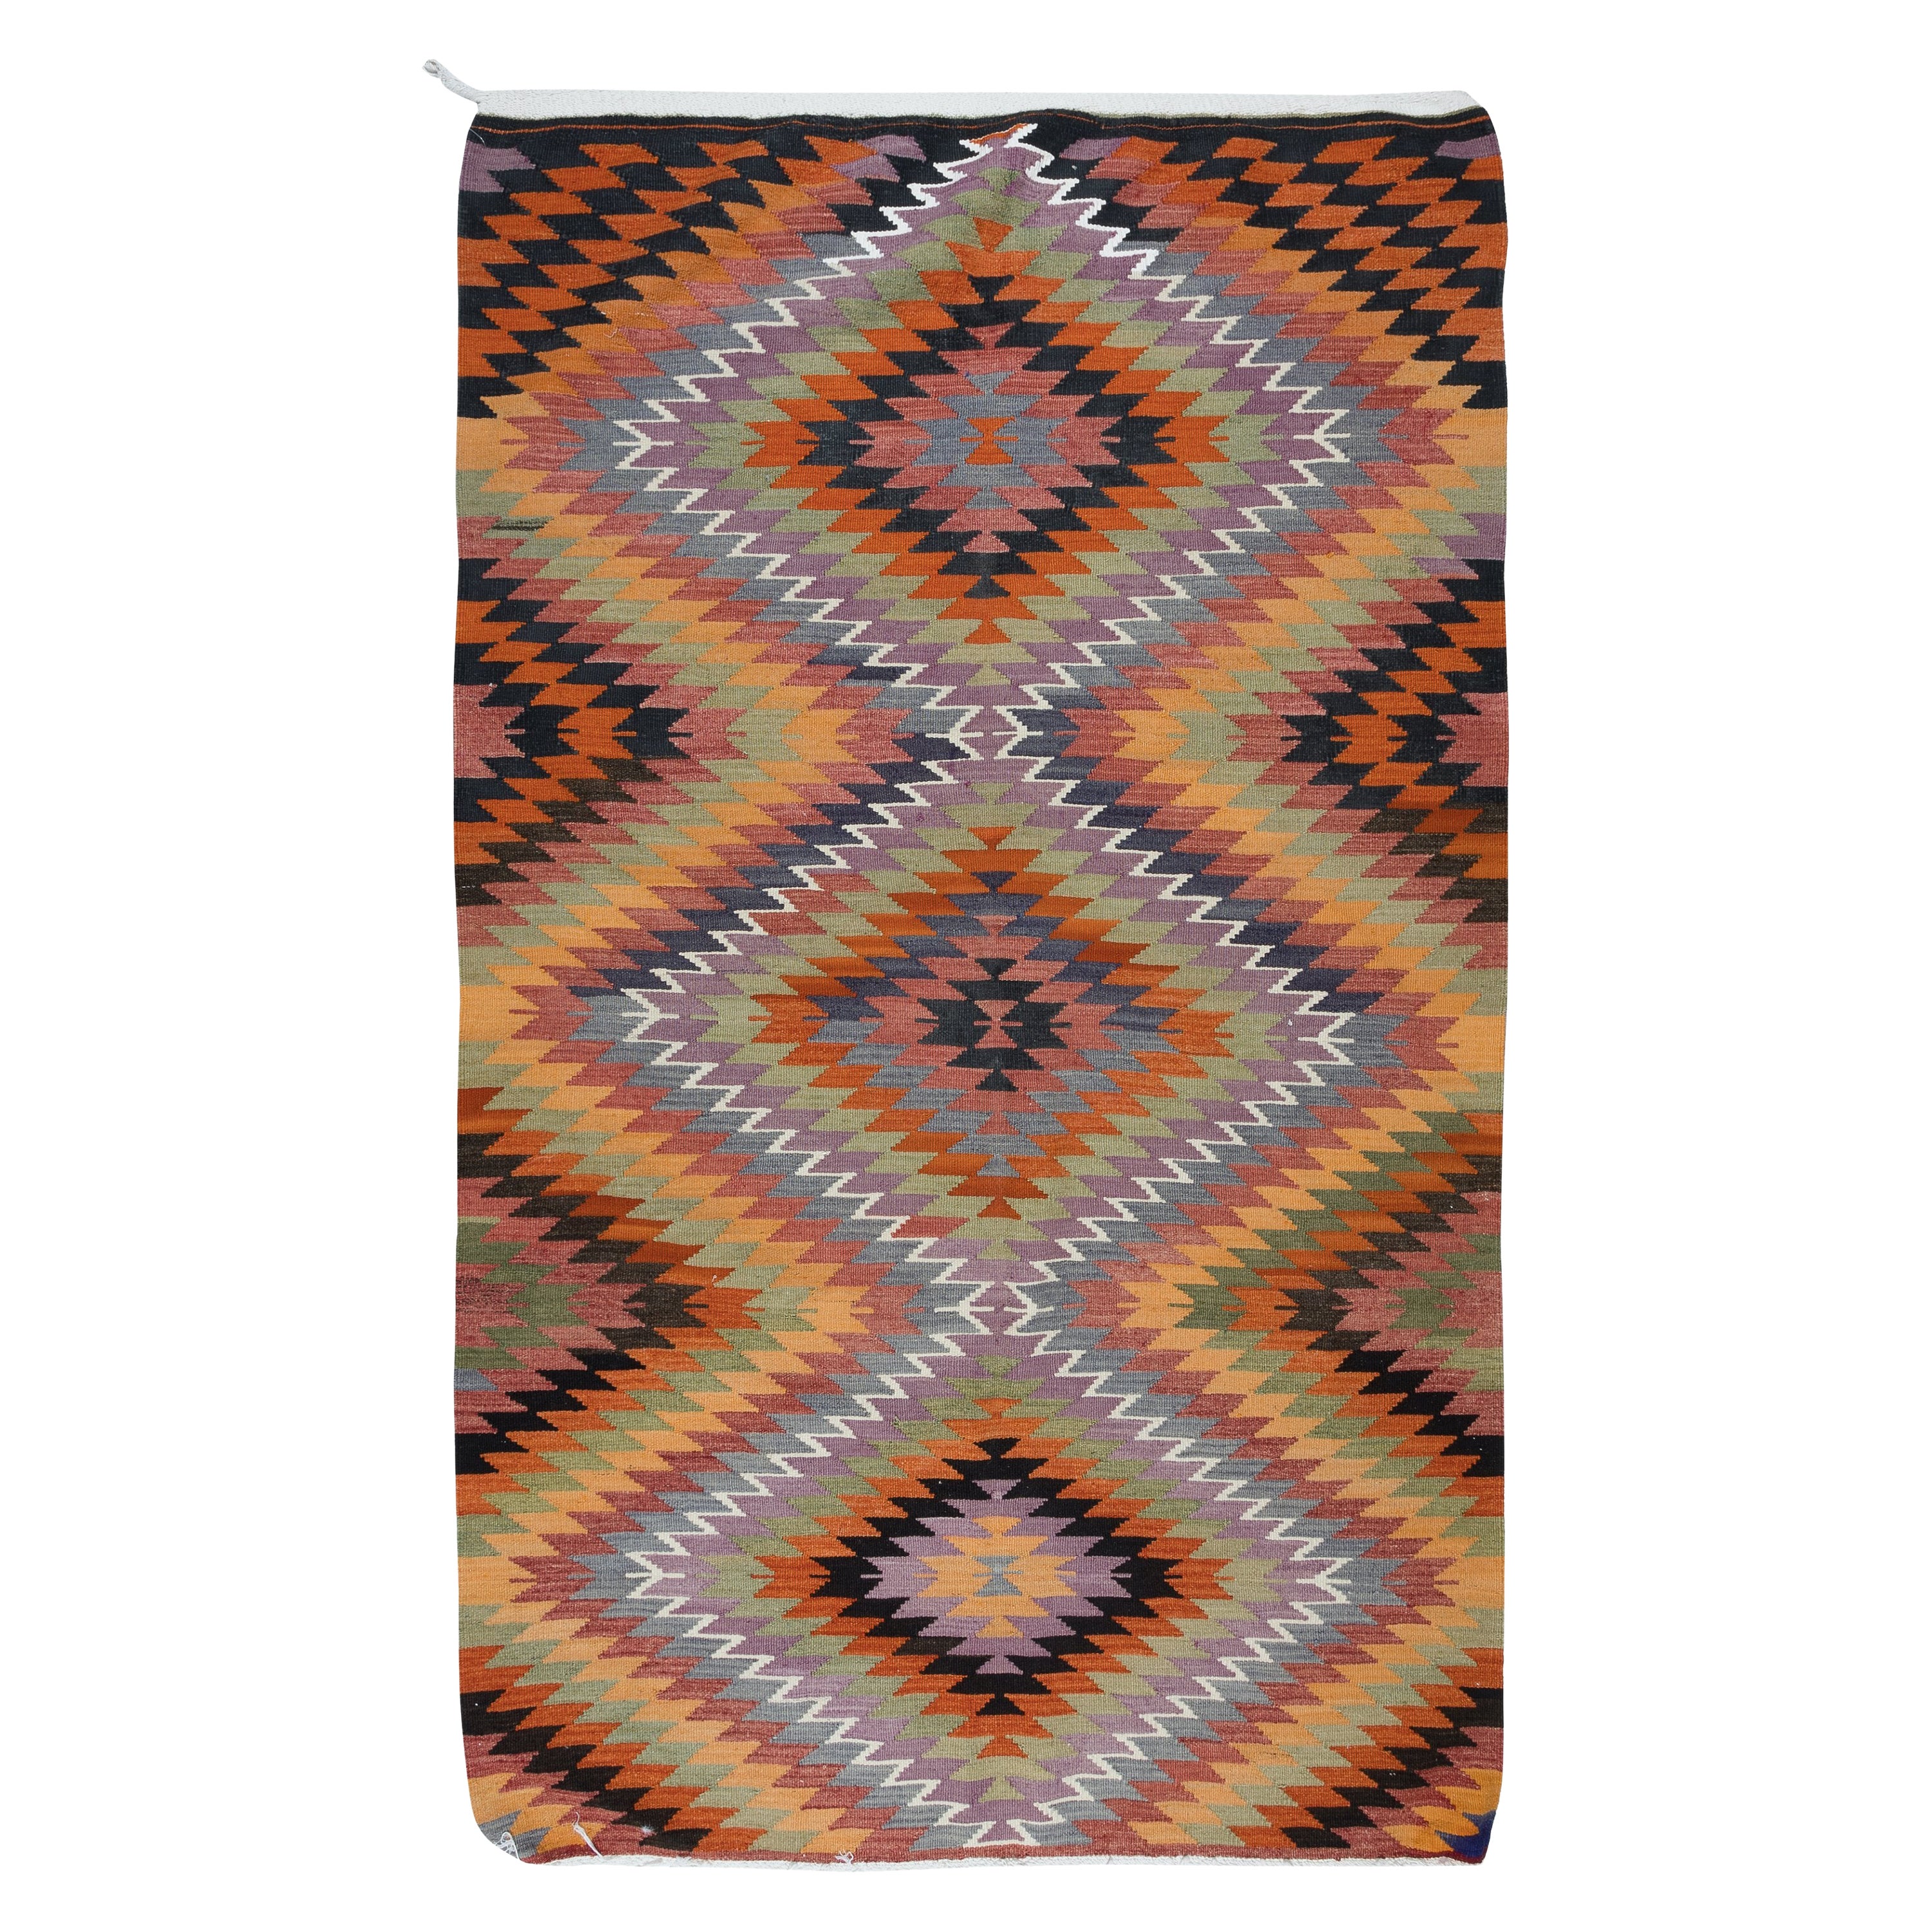 5.6x9.4 Ft Colorful Flat-Weave Turkish Wool Kilim, Vintage Diamond Design Rug For Sale